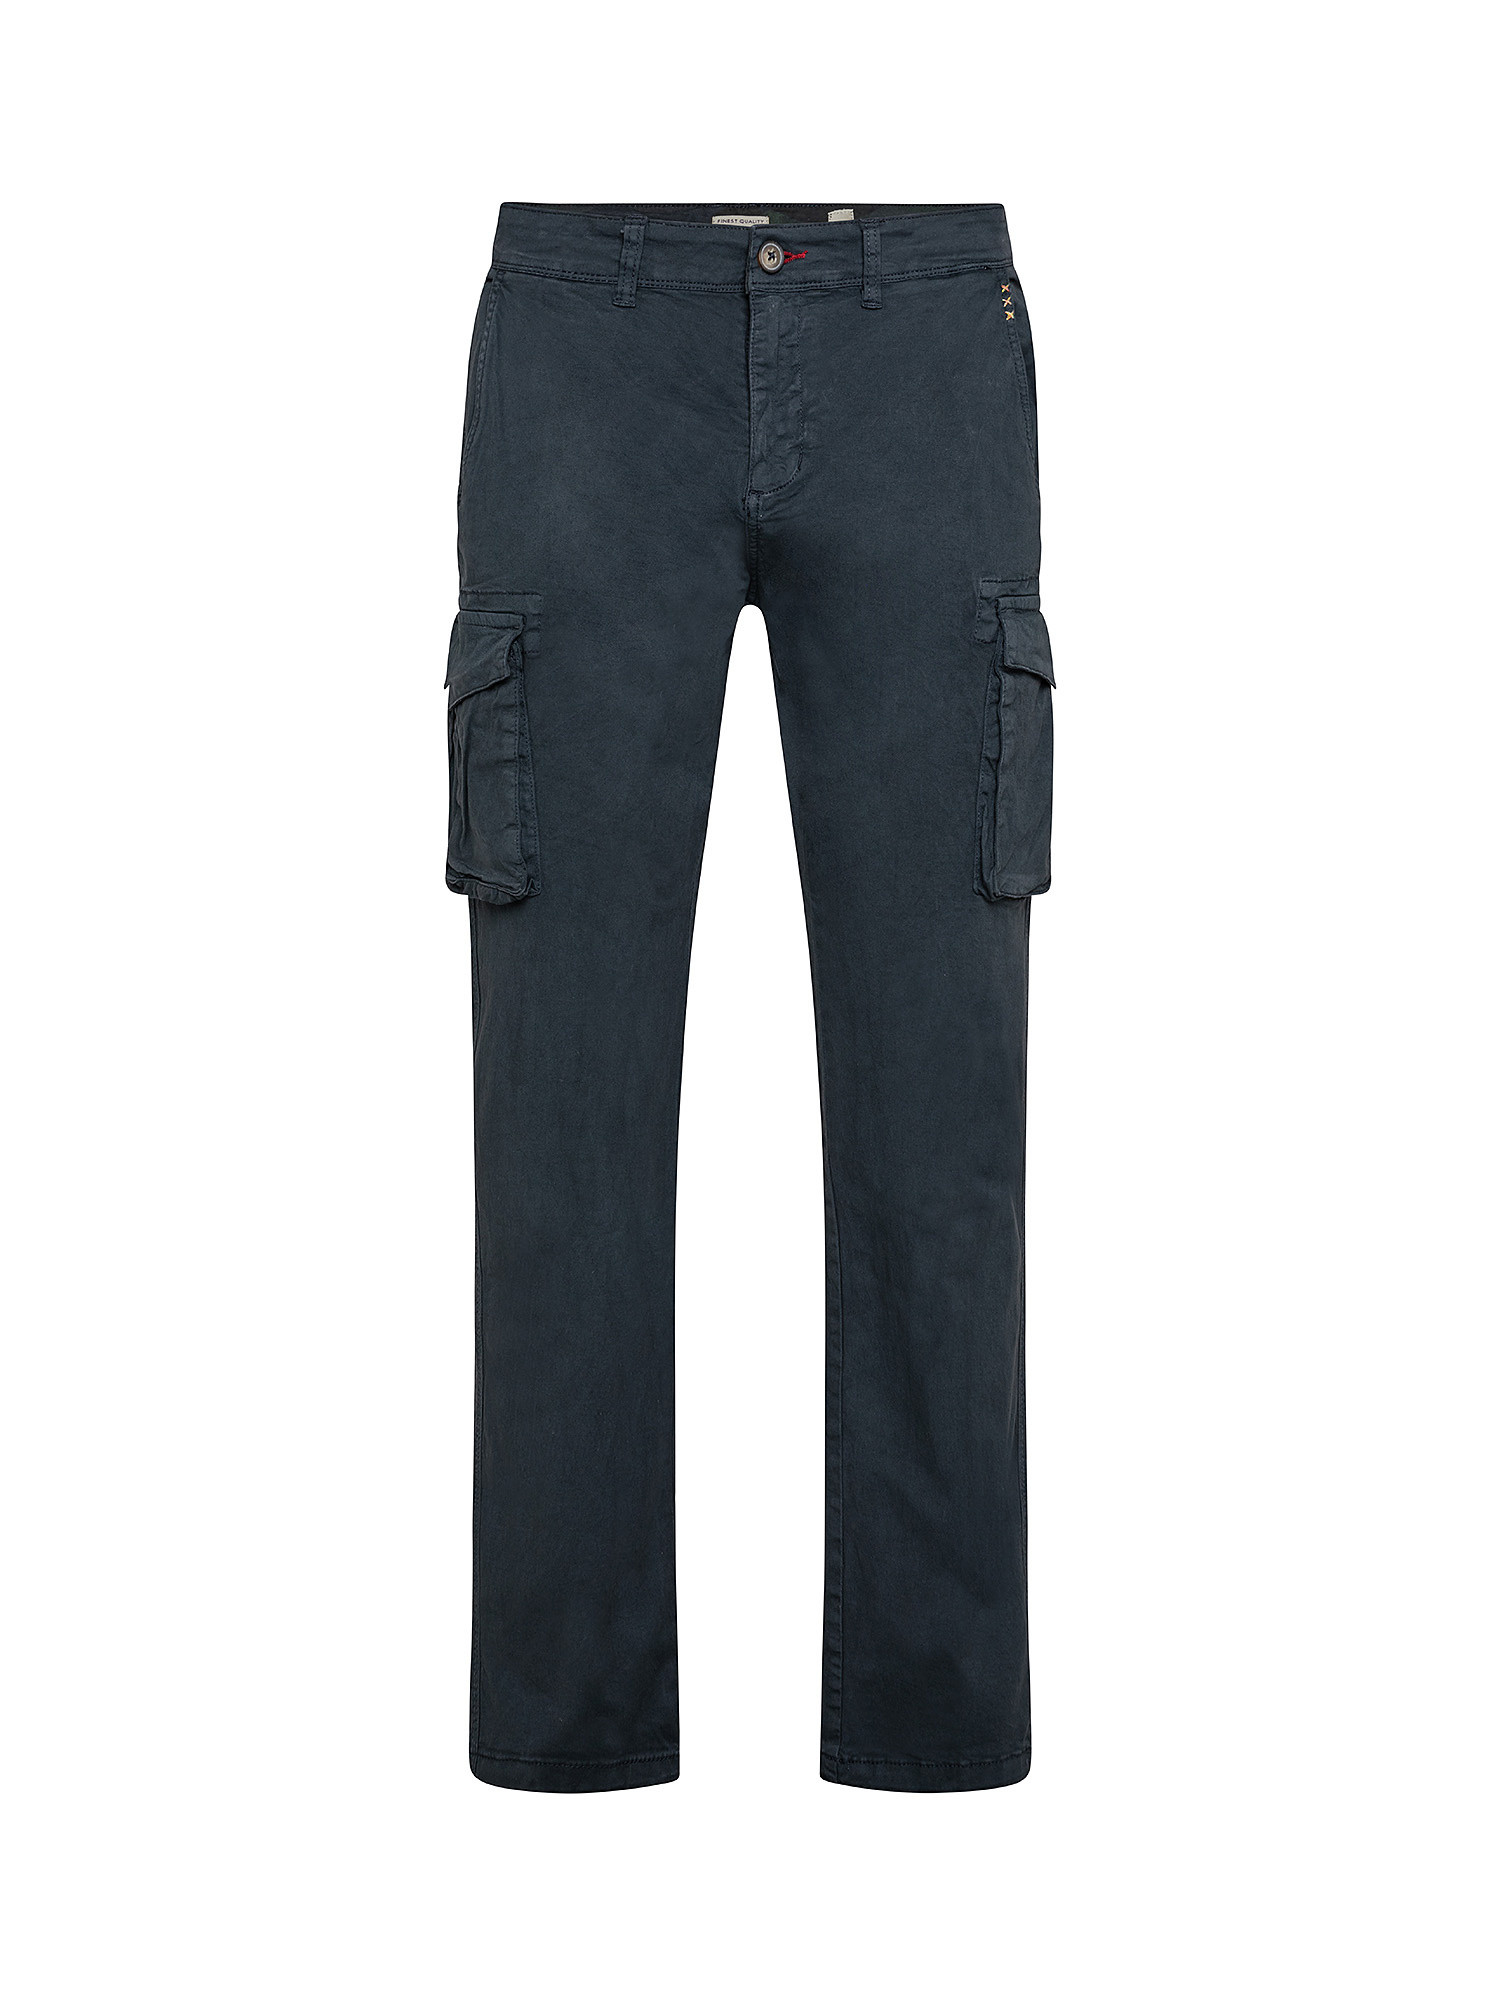 Pantalone cargo cotone stretch, Blu, large image number 0